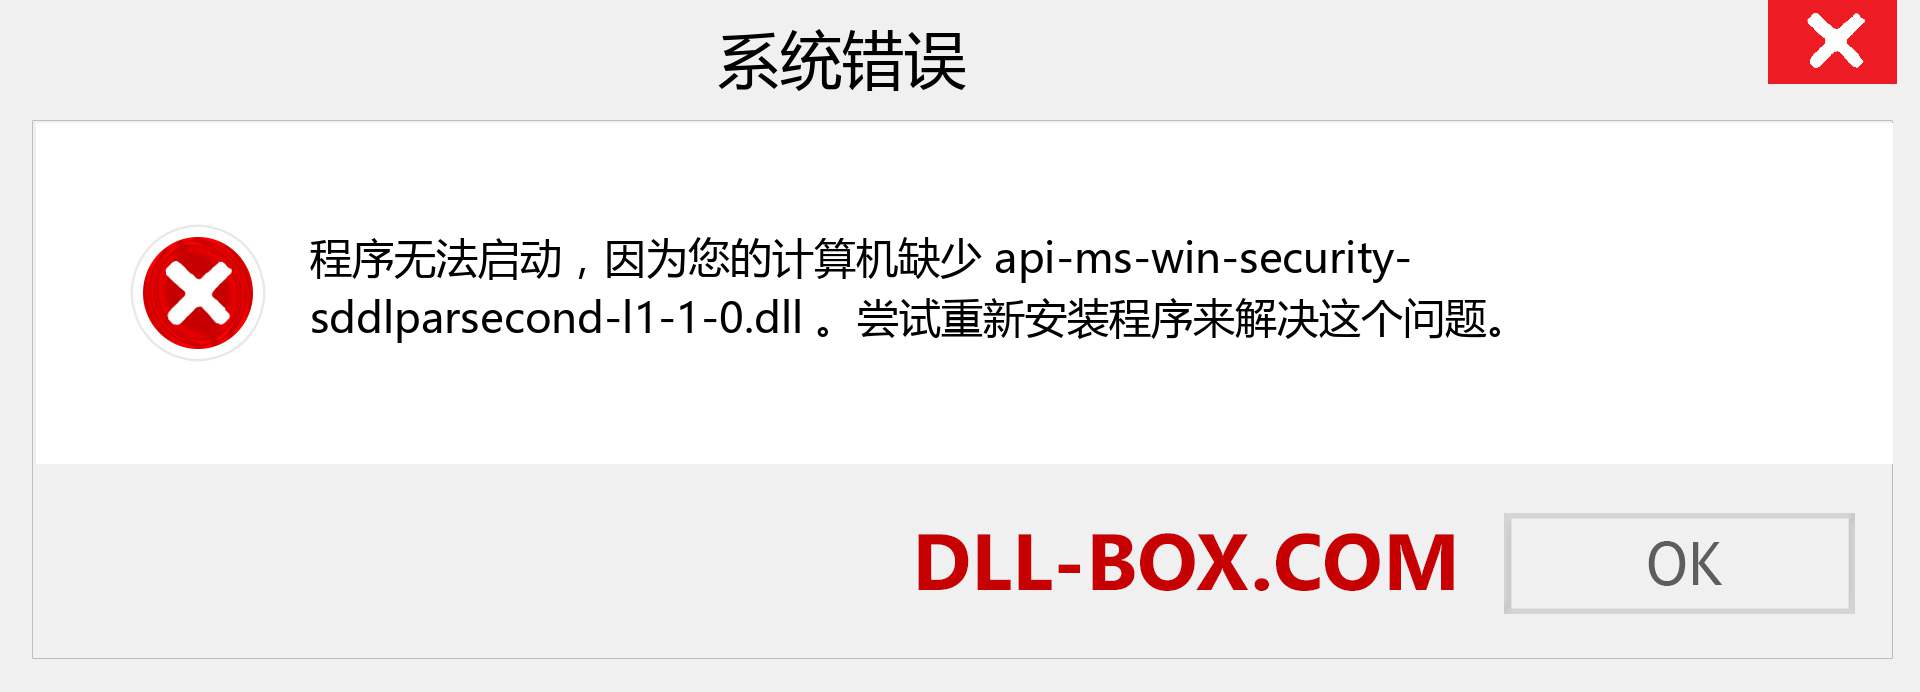 api-ms-win-security-sddlparsecond-l1-1-0.dll 文件丢失？。 适用于 Windows 7、8、10 的下载 - 修复 Windows、照片、图像上的 api-ms-win-security-sddlparsecond-l1-1-0 dll 丢失错误